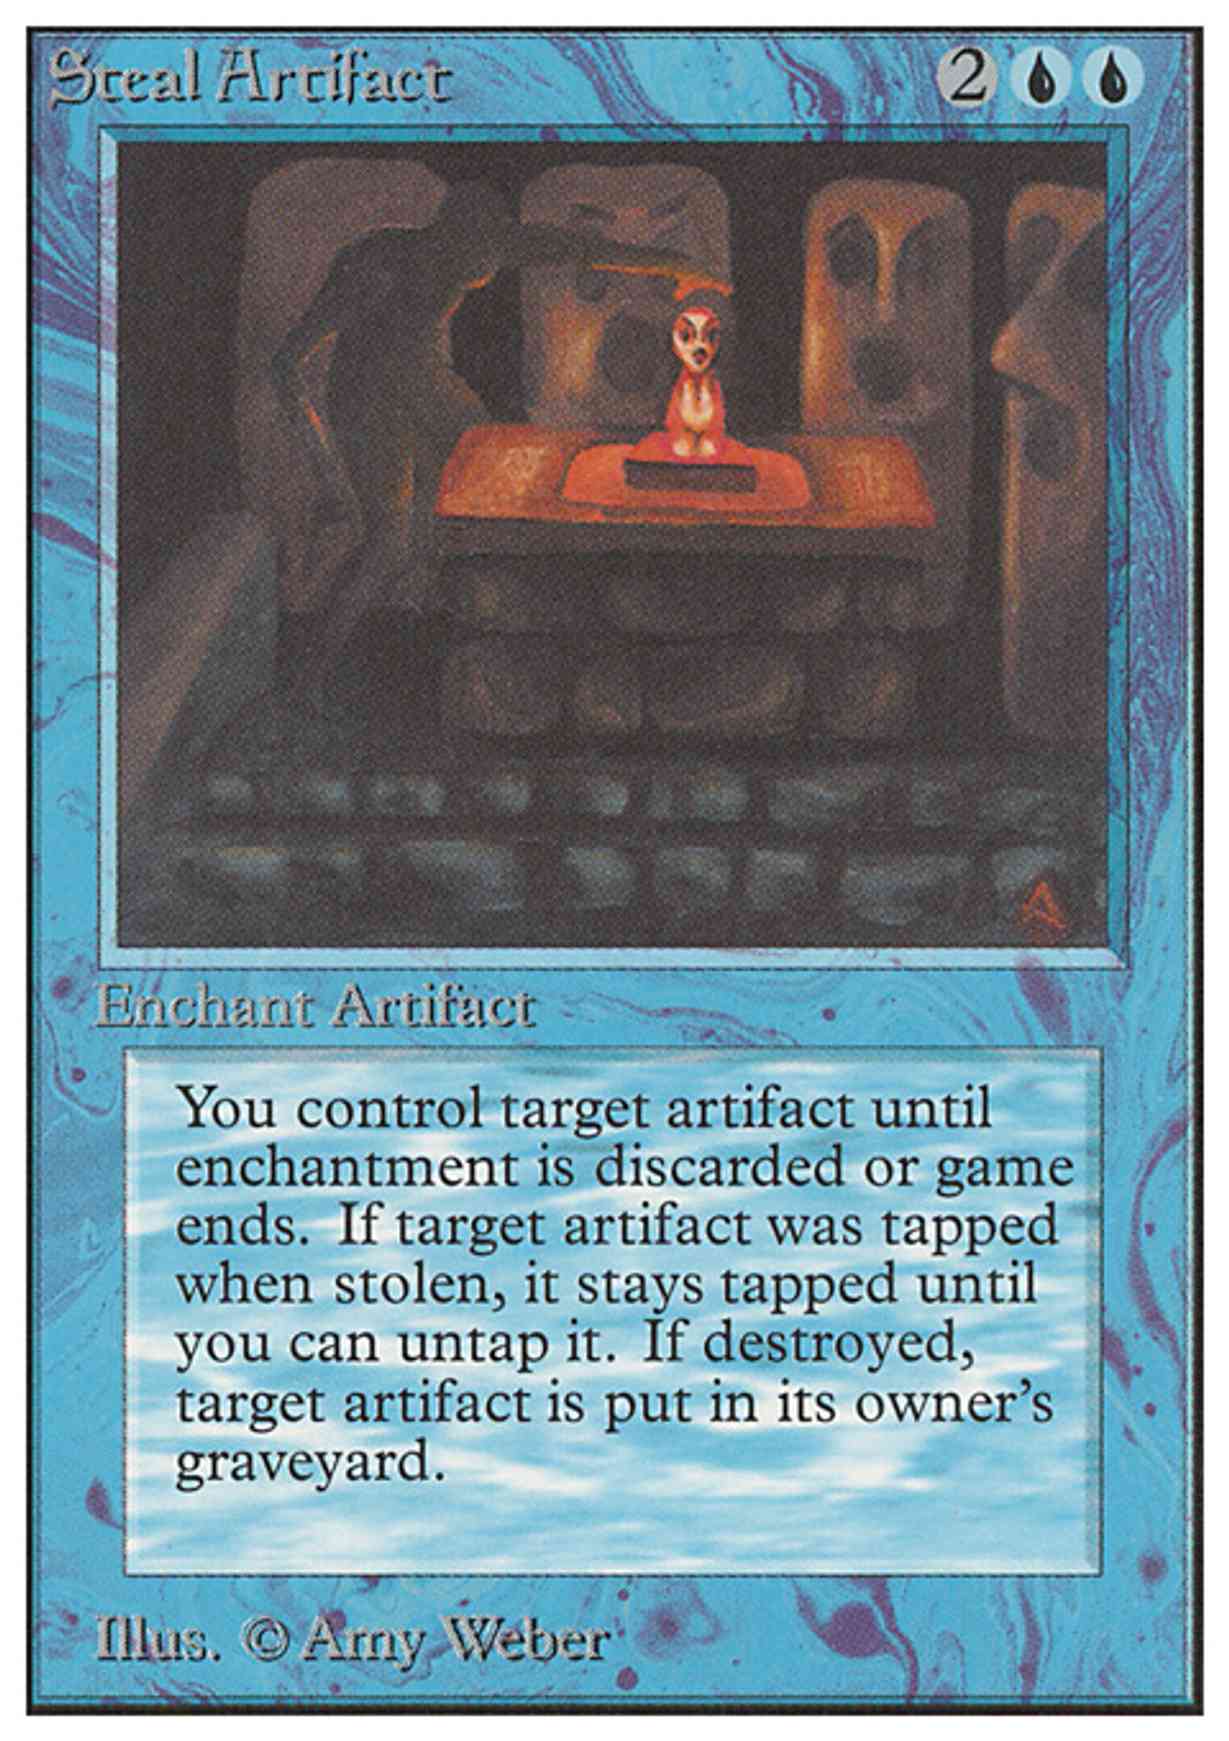 Steal Artifact magic card front